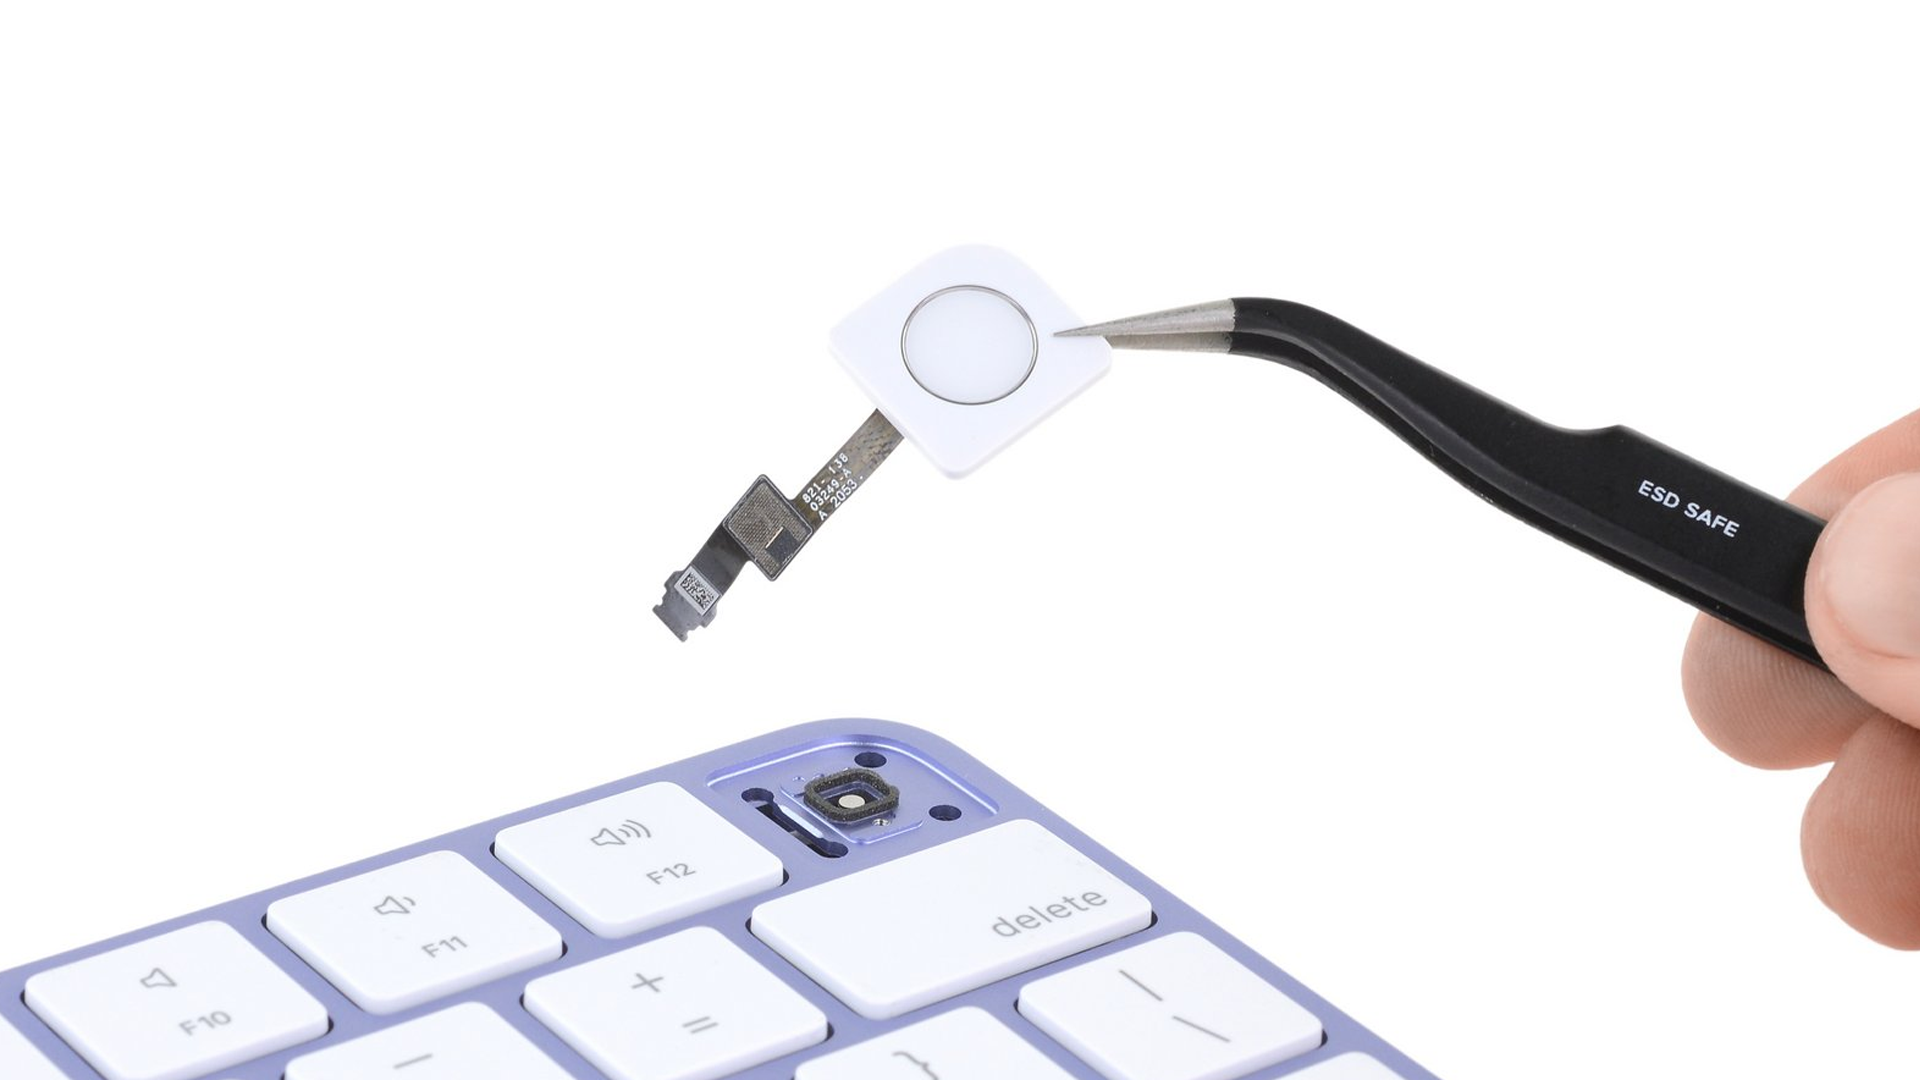 Le capteur Magic Keyboard Touch ID du M1 iMac.